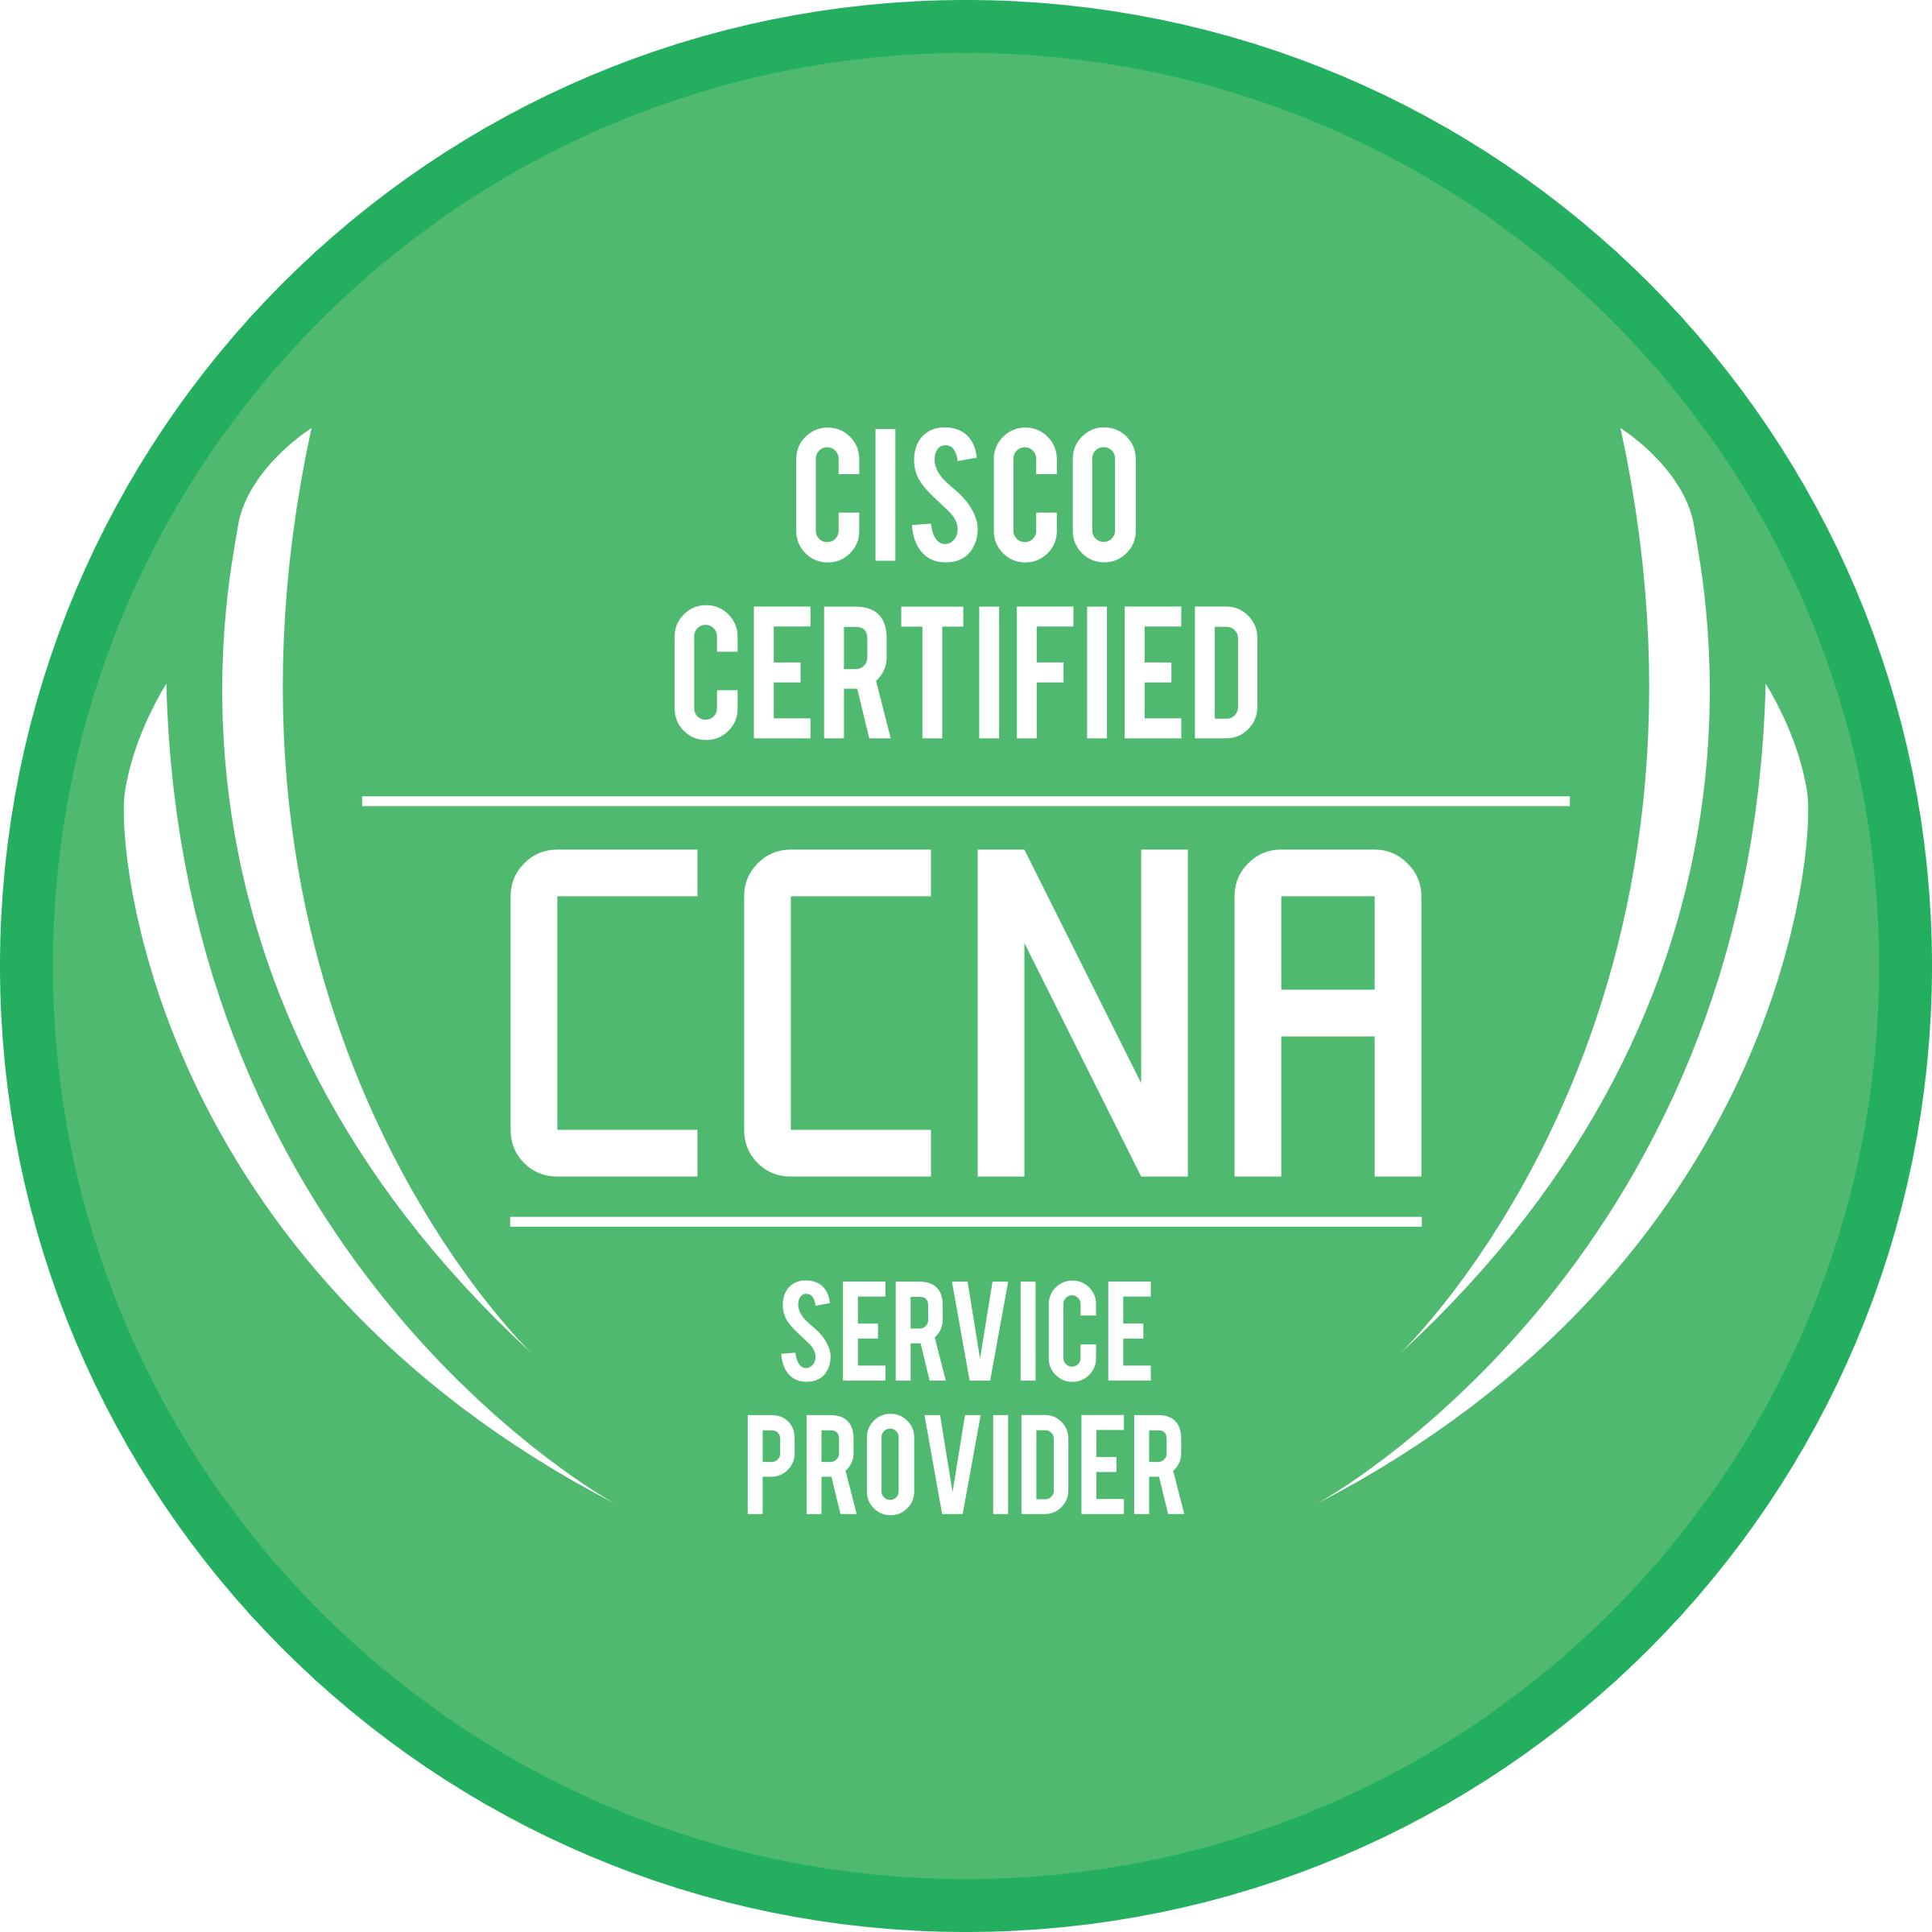 CCNA Service Provider png